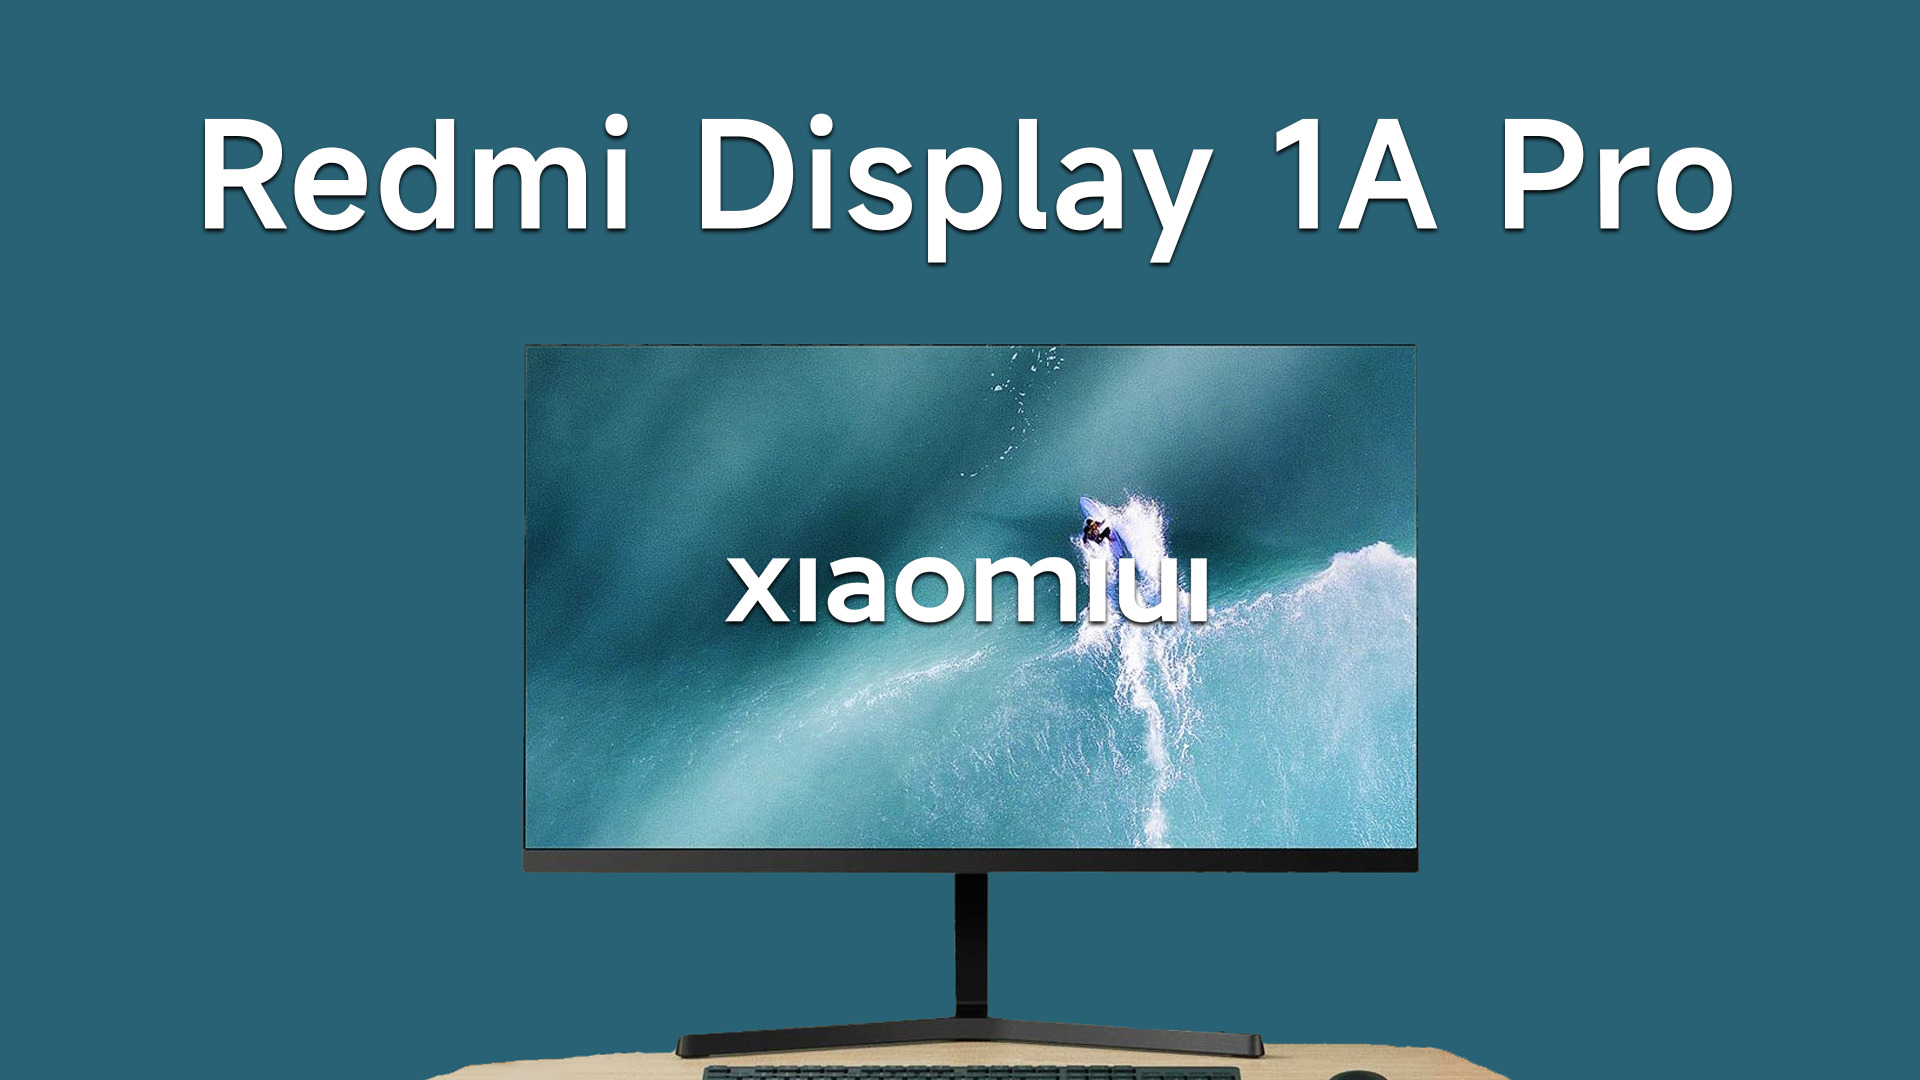 redmi display 1a pro